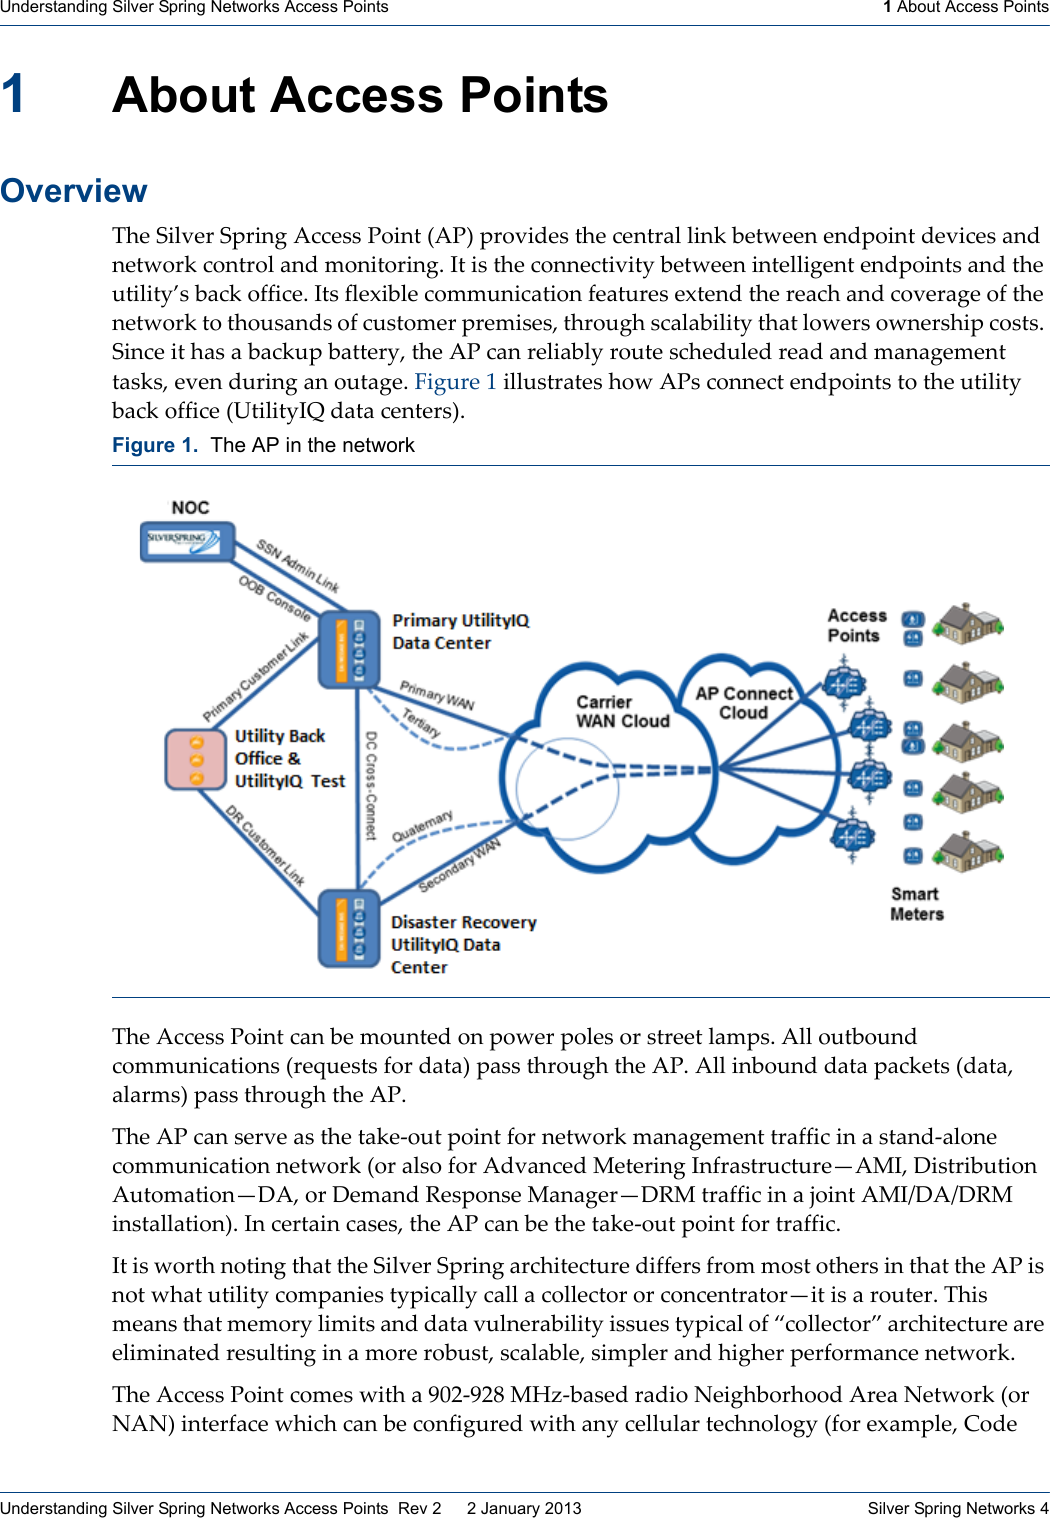 Understanding Silver Spring Networks Access Points 1 About Access PointsUnderstanding Silver Spring Networks Access Points  Rev 2    2 January 2013  Silver Spring Networks 41About Access PointsOverview!&quot;#ȱ$%&amp;&apos;#(ȱ$)(%*+ȱ,--#..ȱ/0%*1ȱ2,/3ȱ)(0&apos;%4#.ȱ1&quot;#ȱ-#*1(5&amp;ȱ&amp;%*6ȱ7#18##*ȱ#*4)0%*1ȱ4#&apos;%-#.ȱ5*4ȱ*#180(6ȱ-0*1(0&amp;ȱ5*4ȱ90*%10(%*+:ȱ;1ȱ%.ȱ1&quot;#ȱ-0**#-1%&apos;%1&lt;ȱ7#18##*ȱ%*1#&amp;&amp;%+#*1ȱ#*4)0%*1.ȱ5*4ȱ1&quot;#ȱ=1%&amp;%1&lt;&gt;.ȱ75-6ȱ0??%-#:ȱ;1.ȱ?&amp;#@%7&amp;#ȱ-099=*%-51%0*ȱ?#51=(#.ȱ#@1#*4ȱ1&quot;#ȱ(#5-&quot;ȱ5*4ȱ-0&apos;#(5+#ȱ0?ȱ1&quot;#ȱ*#180(6ȱ10ȱ1&quot;0=.5*4.ȱ0?ȱ-=.109#(ȱ)(#9%.#.Aȱ1&quot;(0=+&quot;ȱ.-5&amp;57%&amp;%1&lt;ȱ1&quot;51ȱ&amp;08#(.ȱ08*#(.&quot;%)ȱ-0.1.:ȱ$%*-#ȱ%1ȱ&quot;5.ȱ5ȱ75-6=)ȱ7511#(&lt;Aȱ1&quot;#ȱ,/ȱ-5*ȱ(#&amp;%57&amp;&lt;ȱ(0=1#ȱ.-&quot;#4=&amp;#4ȱ(#54ȱ5*4ȱ95*5+#9#*1ȱ15.6.Aȱ#&apos;#*ȱ4=(%*+ȱ5*ȱ0=15+#:ȱB%+=(#ȱCȱ%&amp;&amp;=.1(51#.ȱ&quot;08ȱ,/.ȱ-0**#-1ȱ#*4)0%*1.ȱ10ȱ1&quot;#ȱ=1%&amp;%1&lt;ȱ75-6ȱ0??%-#ȱ2D1%&amp;%1&lt;;Eȱ4515ȱ-#*1#(.3:!&quot;#ȱ,--#..ȱ/0%*1ȱ-5*ȱ7#ȱ90=*1#4ȱ0*ȱ)08#(ȱ)0&amp;#.ȱ0(ȱ.1(##1ȱ&amp;59).:ȱ,&amp;&amp;ȱ0=170=*4ȱ-099=*%-51%0*.ȱ2(#F=#.1.ȱ?0(ȱ45153ȱ)5..ȱ1&quot;(0=+&quot;ȱ1&quot;#ȱ,/:ȱ,&amp;&amp;ȱ%*70=*4ȱ4515ȱ)5-6#1.ȱ24515Aȱ5&amp;5(9.3ȱ)5..ȱ1&quot;(0=+&quot;ȱ1&quot;#ȱ,/:!&quot;#ȱ,/ȱ-5*ȱ.#(&apos;#ȱ5.ȱ1&quot;#ȱ156#Ȭ0=1ȱ)0%*1ȱ?0(ȱ*#180(6ȱ95*5+#9#*1ȱ1(5??%-ȱ%*ȱ5ȱ.15*4Ȭ5&amp;0*#ȱ-099=*%-51%0*ȱ*#180(6ȱ20(ȱ5&amp;.0ȱ?0(ȱ,4&apos;5*-#4ȱG#1#(%*+ȱ;*?(5.1(=-1=(#H,G;AȱI%.1(%7=1%0*ȱ,=10951%0*HI,Aȱ0(ȱI#95*4ȱJ#.)0*.#ȱG5*5+#(HIJGȱ1(5??%-ȱ%*ȱ5ȱK0%*1ȱ,G;LI,LIJGȱ%*.15&amp;&amp;51%0*3:ȱ;*ȱ-#(15%*ȱ-5.#.Aȱ1&quot;#ȱ,/ȱ-5*ȱ7#ȱ1&quot;#ȱ156#Ȭ0=1ȱ)0%*1ȱ?0(ȱ1(5??%-:ȱ;1ȱ%.ȱ80(1&quot;ȱ*01%*+ȱ1&quot;51ȱ1&quot;#ȱ$%&amp;&apos;#(ȱ$)(%*+ȱ5(-&quot;%1#-1=(#ȱ4%??#(.ȱ?(09ȱ90.1ȱ01&quot;#(.ȱ%*ȱ1&quot;51ȱ1&quot;#ȱ,/ȱ%.ȱ*01ȱ8&quot;51ȱ=1%&amp;%1&lt;ȱ-09)5*%#.ȱ1&lt;)%-5&amp;&amp;&lt;ȱ-5&amp;&amp;ȱ5ȱ-0&amp;&amp;#-10(ȱ0(ȱ-0*-#*1(510(H%1ȱ%.ȱ5ȱ(0=1#(:ȱ!&quot;%.ȱ9#5*.ȱ1&quot;51ȱ9#90(&lt;ȱ&amp;%9%1.ȱ5*4ȱ4515ȱ&apos;=&amp;*#(57%&amp;%1&lt;ȱ%..=#.ȱ1&lt;)%-5&amp;ȱ0?ȱM-0&amp;&amp;#-10(Nȱ5(-&quot;%1#-1=(#ȱ5(#ȱ#&amp;%9%*51#4ȱ(#.=&amp;1%*+ȱ%*ȱ5ȱ90(#ȱ(07=.1Aȱ.-5&amp;57&amp;#Aȱ.%9)&amp;#(ȱ5*4ȱ&quot;%+&quot;#(ȱ)#(?0(95*-#ȱ*#180(6:!&quot;#ȱ,--#..ȱ/0%*1ȱ-09#.ȱ8%1&quot;ȱ5ȱOPQȬOQRȱGSTȬ75.#4ȱ(54%0ȱU#%+&quot;70(&quot;004ȱ,(#5ȱU#180(6ȱ20(ȱU,U3ȱ%*1#(?5-#ȱ8&quot;%-&quot;ȱ-5*ȱ7#ȱ-0*?%+=(#4ȱ8%1&quot;ȱ5*&lt;ȱ-#&amp;&amp;=&amp;5(ȱ1#-&quot;*0&amp;0+&lt;ȱ2?0(ȱ#@59)&amp;#AȱV04#ȱFigure 1.  The AP in the network